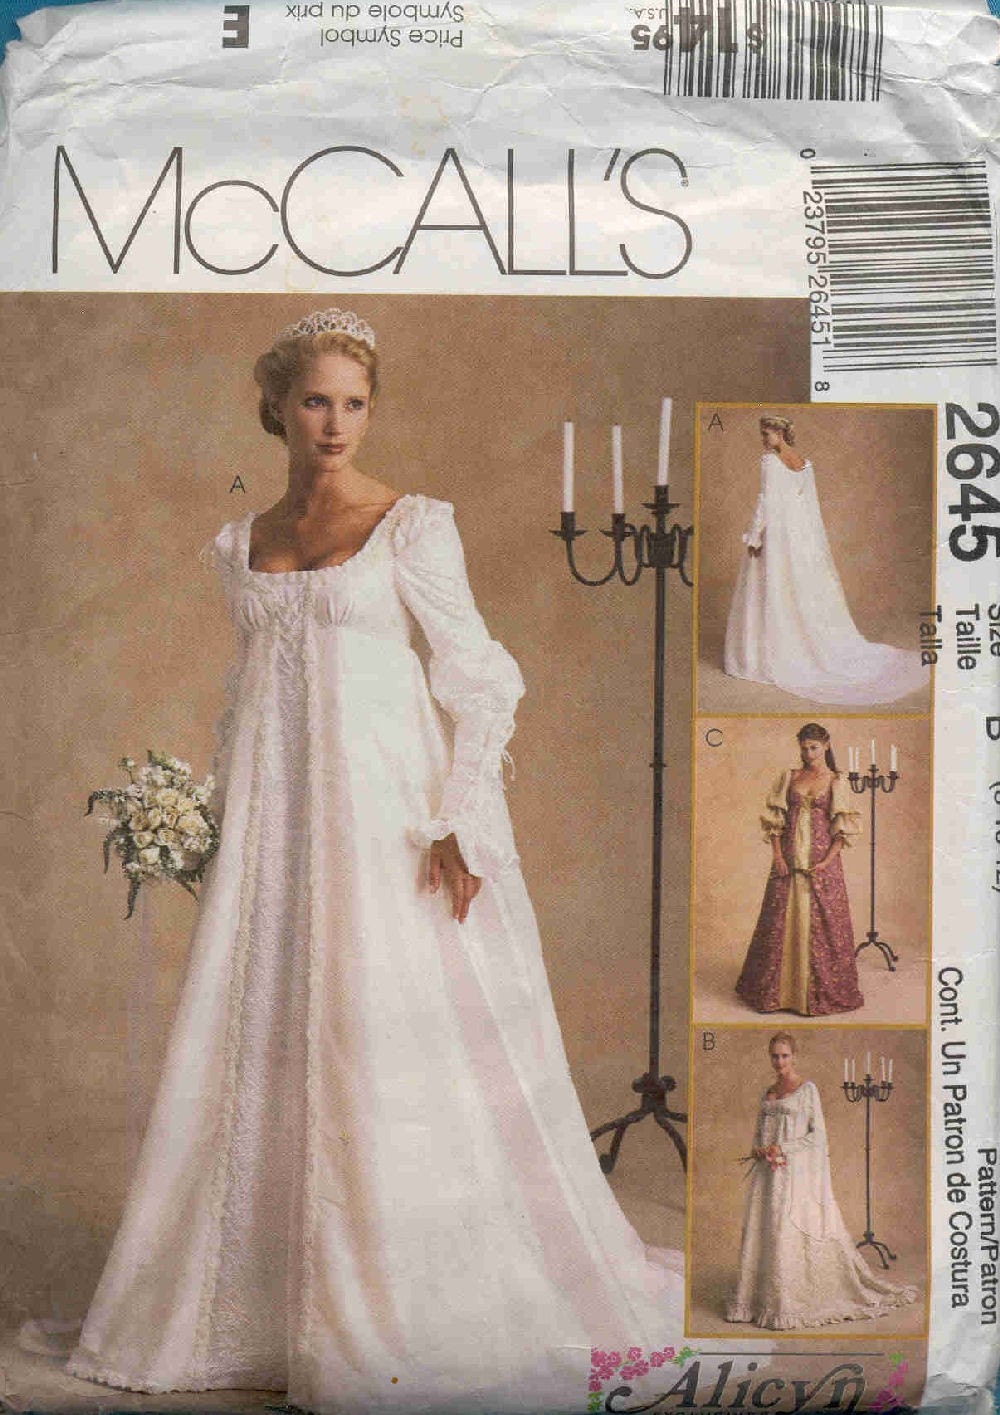 McCall's 2645 Renaissance Inspired Wedding Dress pattern by Alycin